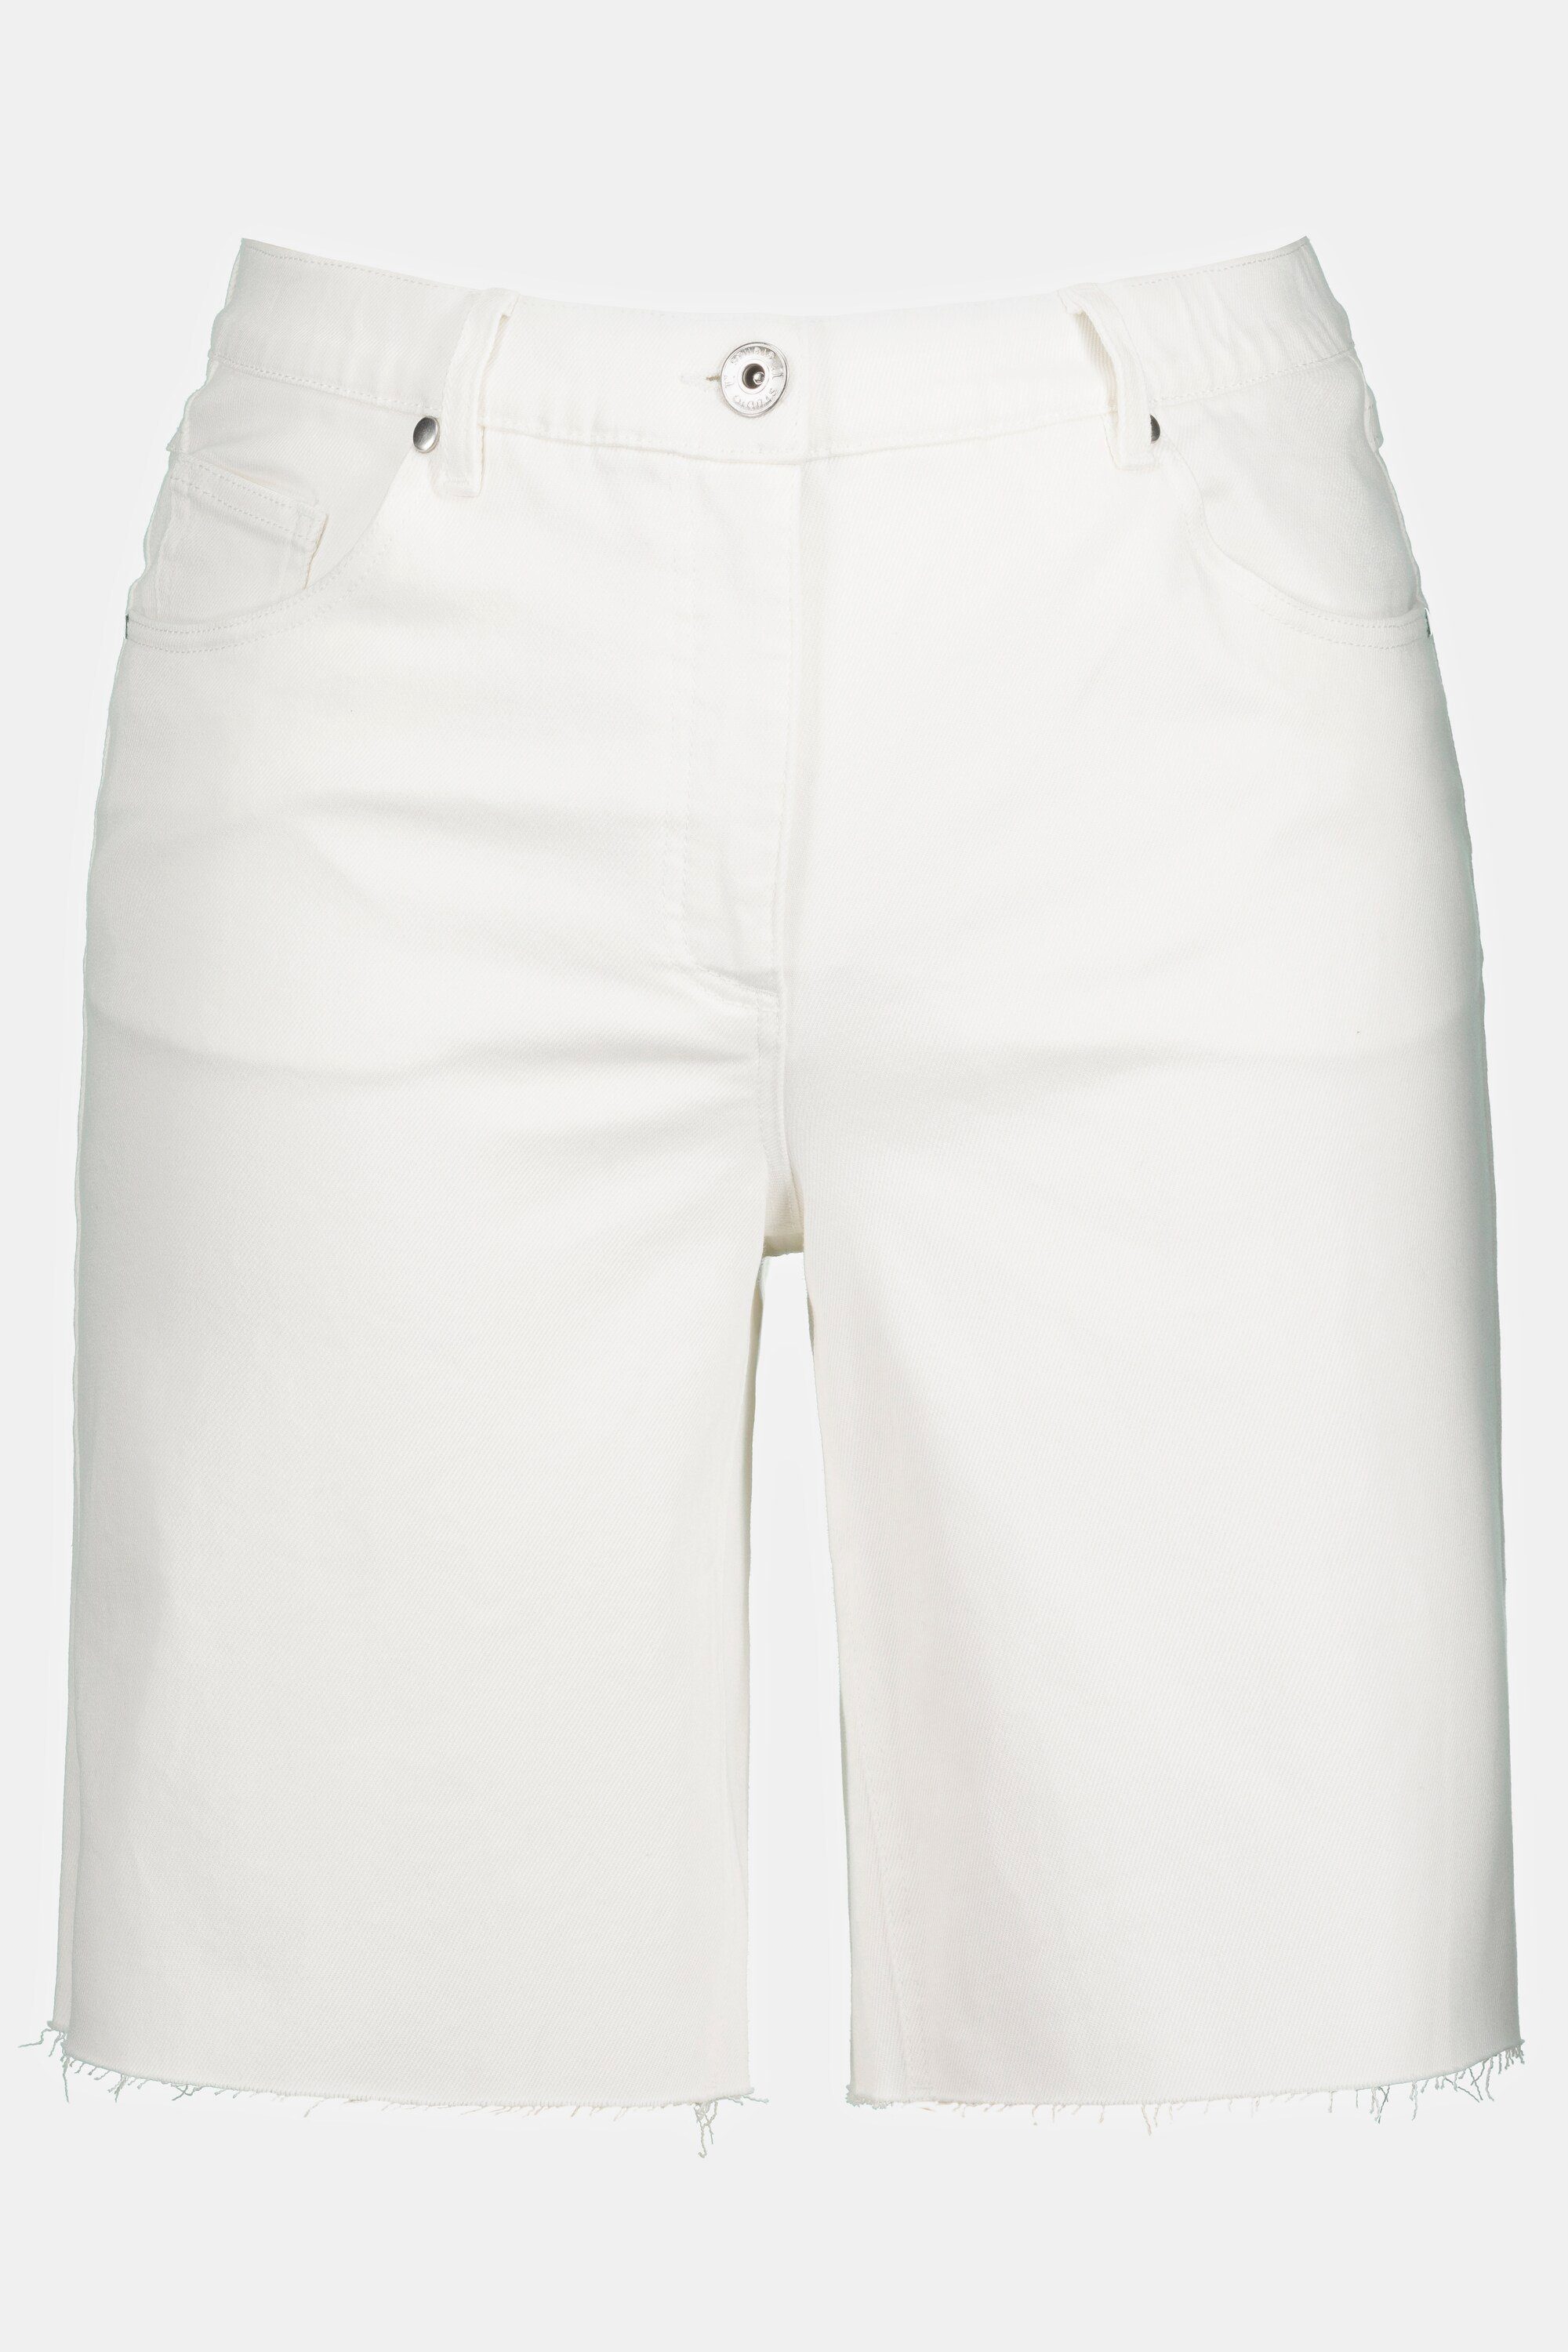 Studio Untold Jeansshorts 5-Pocket High Waist Jeans-Shorts offwhite